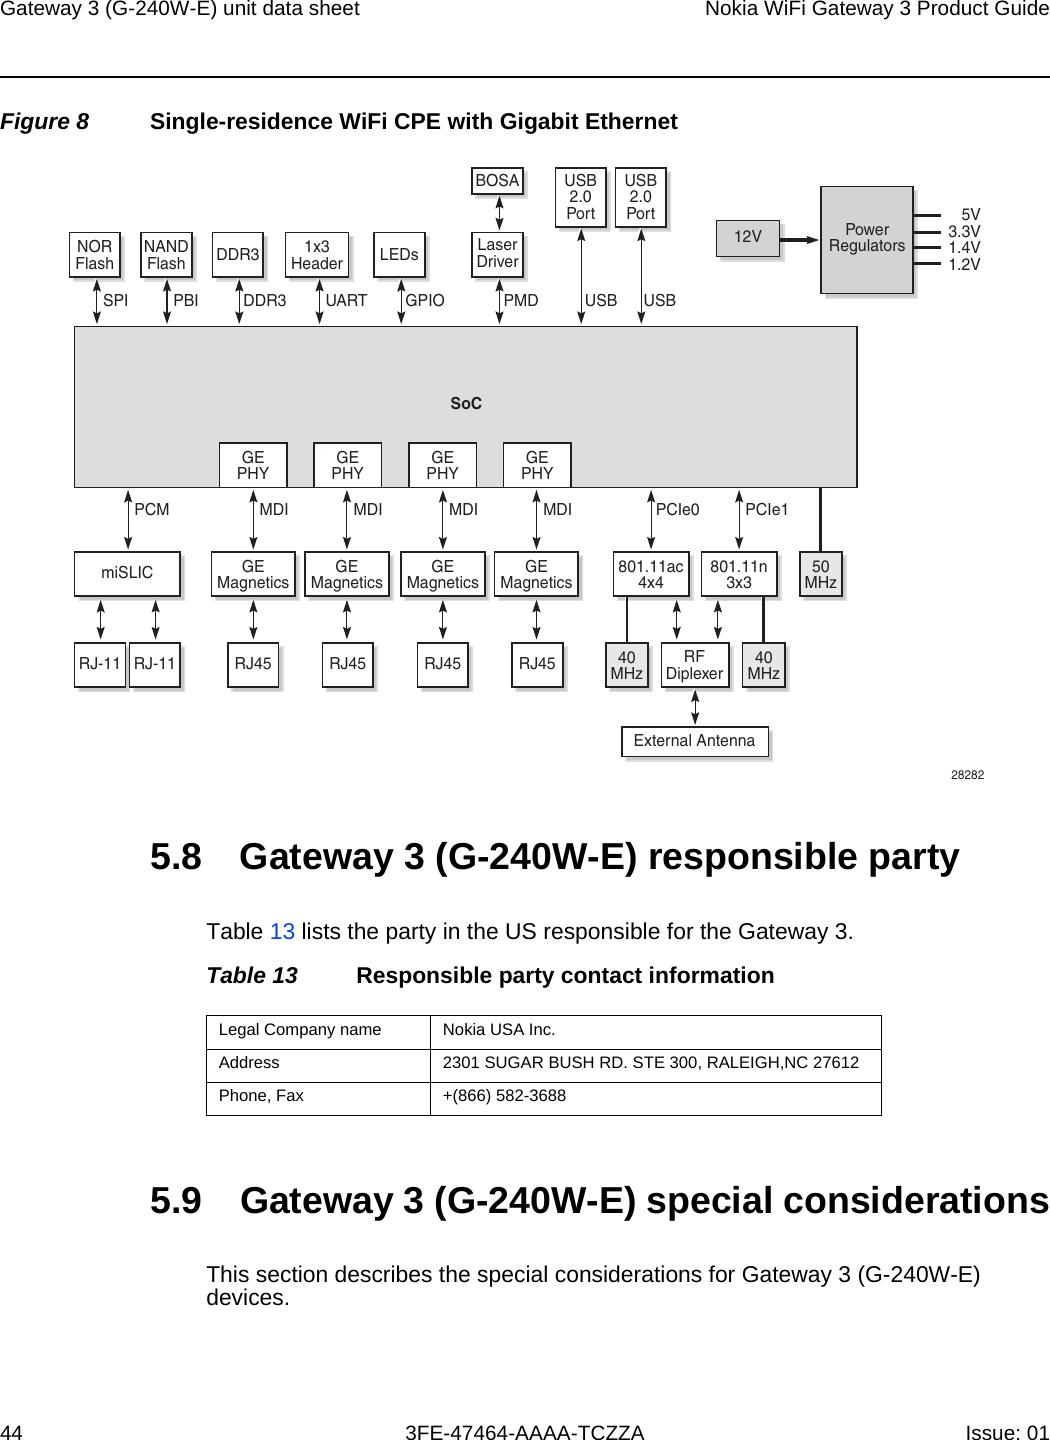 Gateway 3 (G-240W-E) unit data sheet44Nokia WiFi Gateway 3 Product Guide3FE-47464-AAAA-TCZZA Issue: 01 Figure 8 Single-residence WiFi CPE with Gigabit Ethernet5.8 Gateway 3 (G-240W-E) responsible partyTable 13 lists the party in the US responsible for the Gateway 3.Table 13 Responsible party contact information5.9 Gateway 3 (G-240W-E) special considerationsThis section describes the special considerations for Gateway 3 (G-240W-E) devices.28282NANDFlash DDR3 1x3HeaderNORFlashGEPHYGEPHYRJ45 RJ45RJ-11miSLICRJ-11GEMagneticsGEMagneticsLEDsSoCSPI PBI DDR3 UART GPIOLaserDriverBOSAPMD USB USBUSB2.0PortUSB2.0PortMDIPCM MDIGEPHYGEPHYRJ45 RJ45 40MHzRFDiplexerExternal AntennaGEMagneticsGEMagneticsMDI MDI801.11ac4x4801.11n3x3PCIe0 PCIe1   5V3.3V1.4V1.2VPowerRegulators12V40MHz50MHzLegal Company name Nokia USA Inc.Address 2301 SUGAR BUSH RD. STE 300, RALEIGH,NC 27612Phone, Fax +(866) 582-3688 